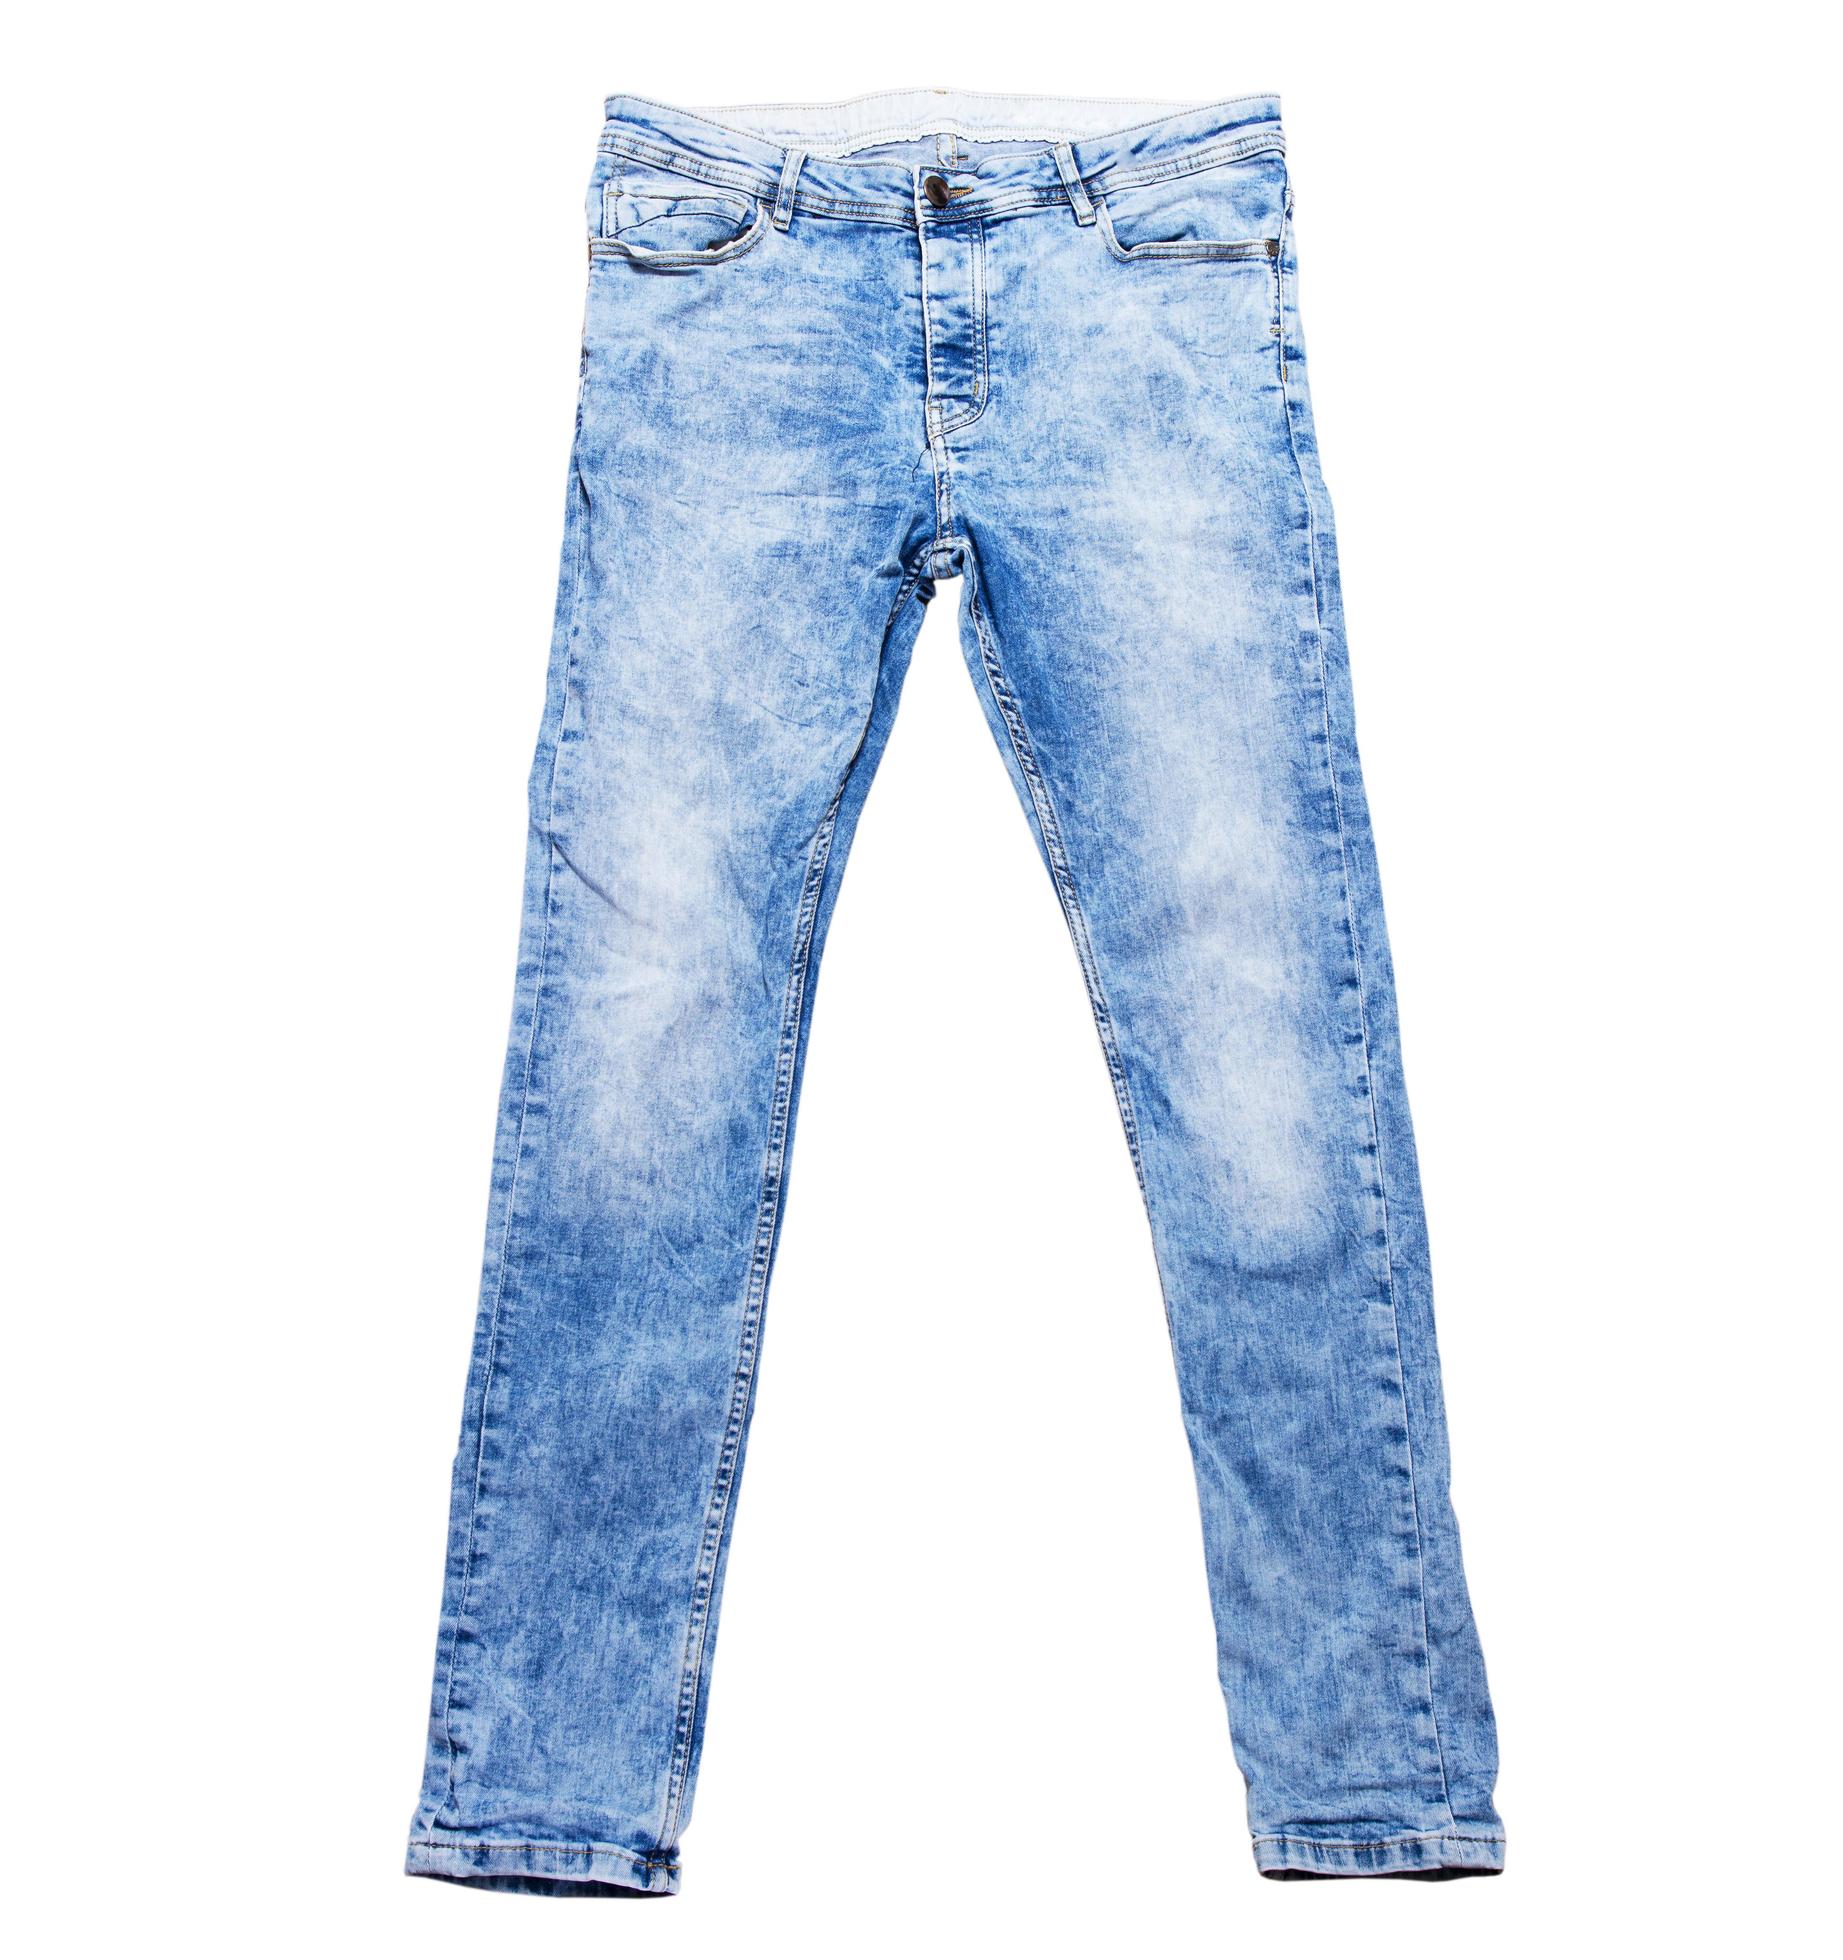 Blue denim pants on white close up copy space, blue jeans background ...